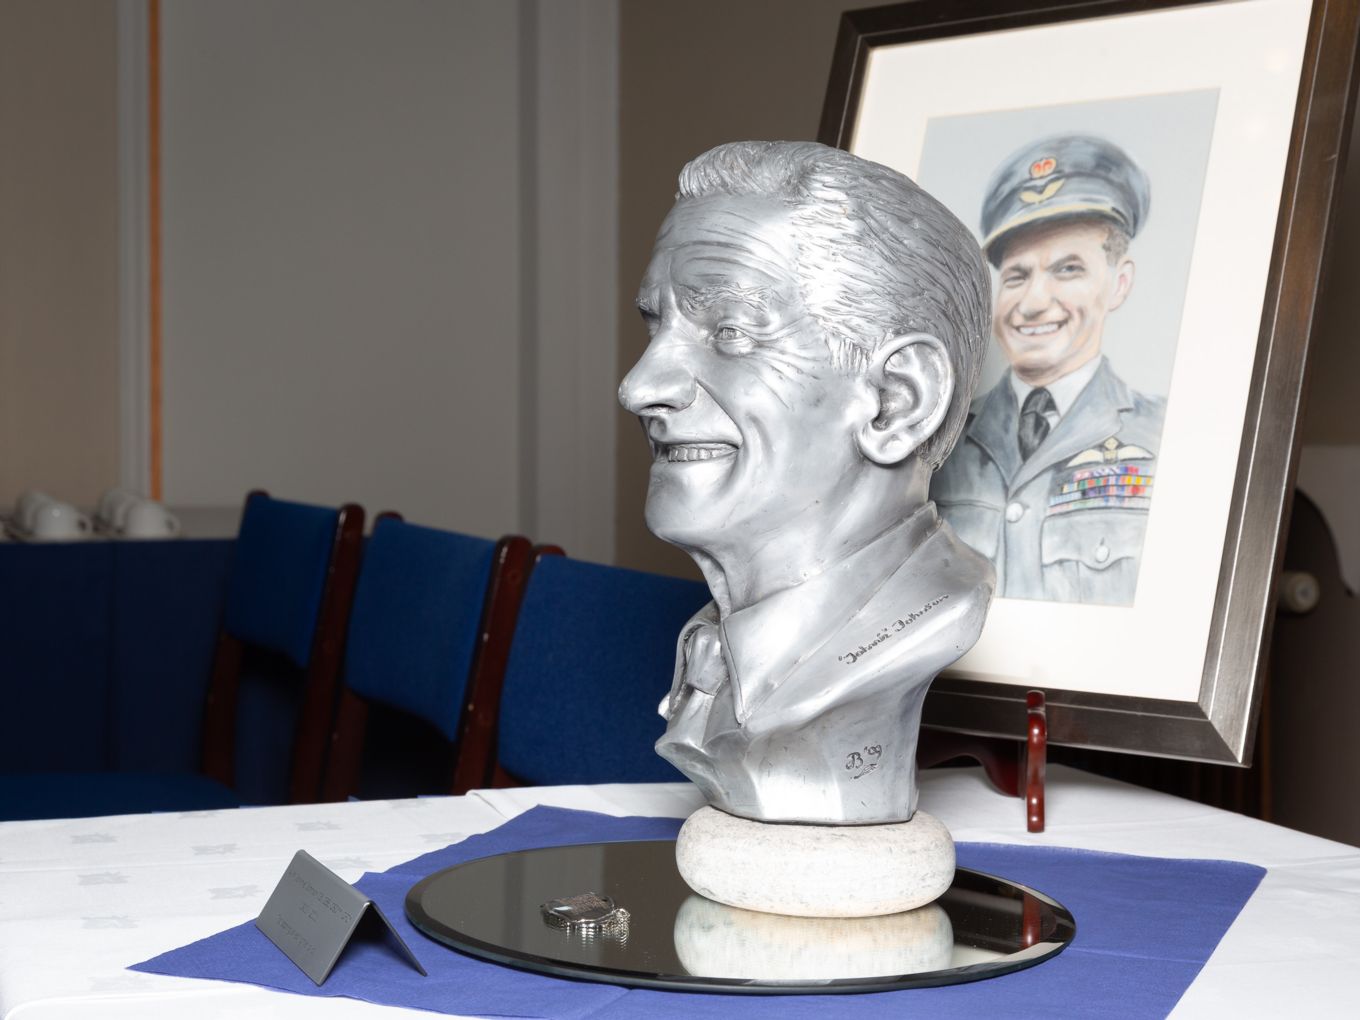 The bust of Air Vice Marshal James Edgar Johnson